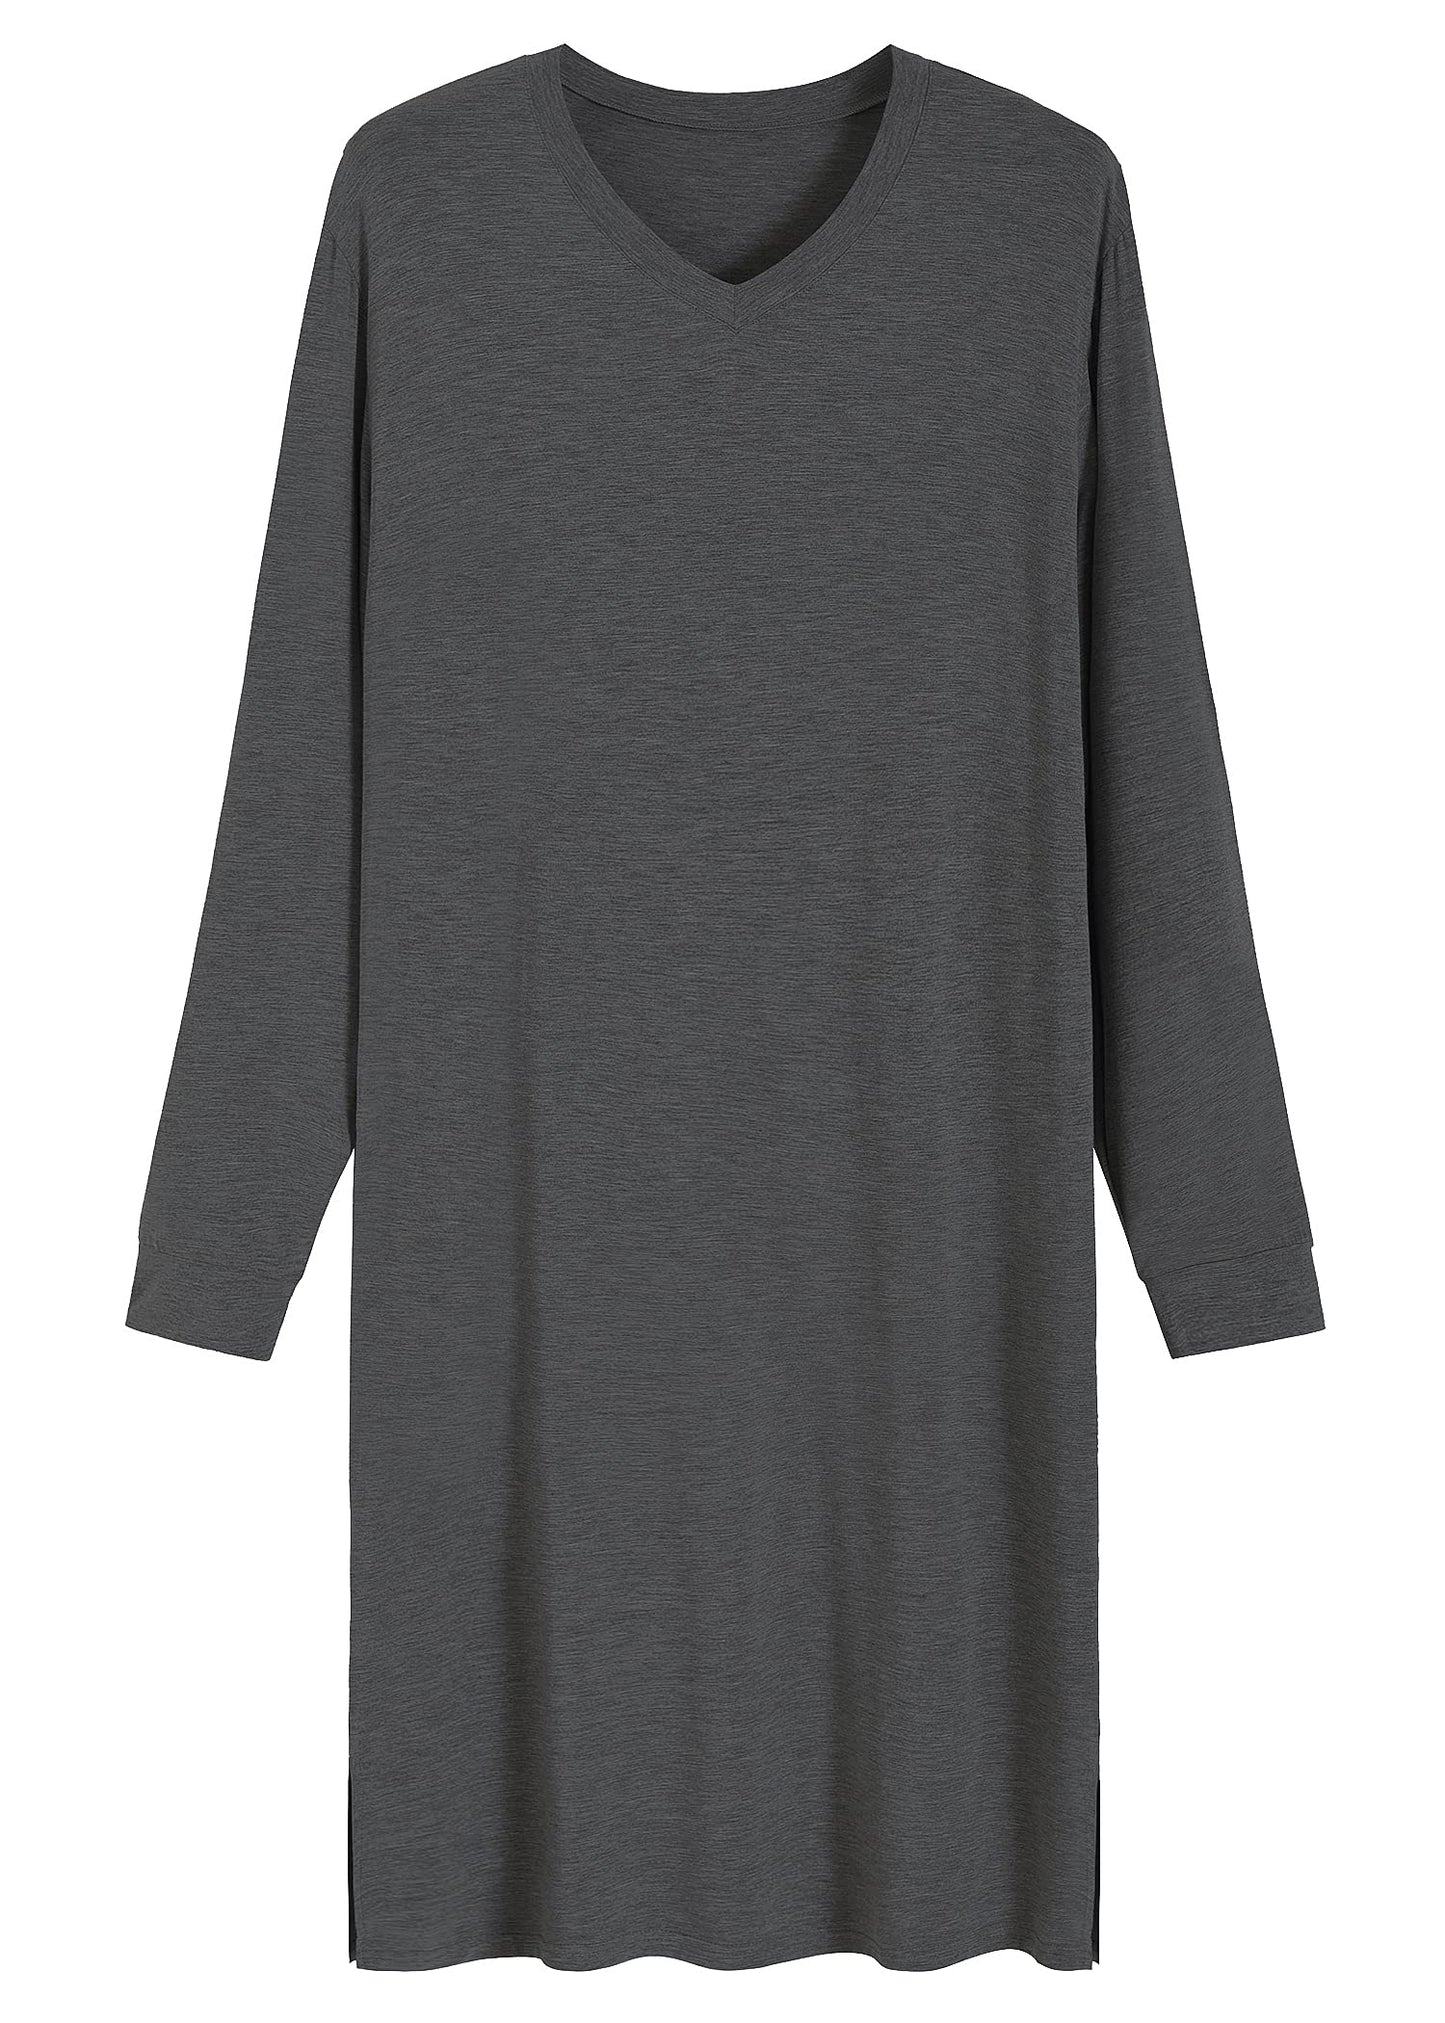 Men's V Neck Nightshirt Long Sleeves Sleep Shirt Nightgown - Latuza